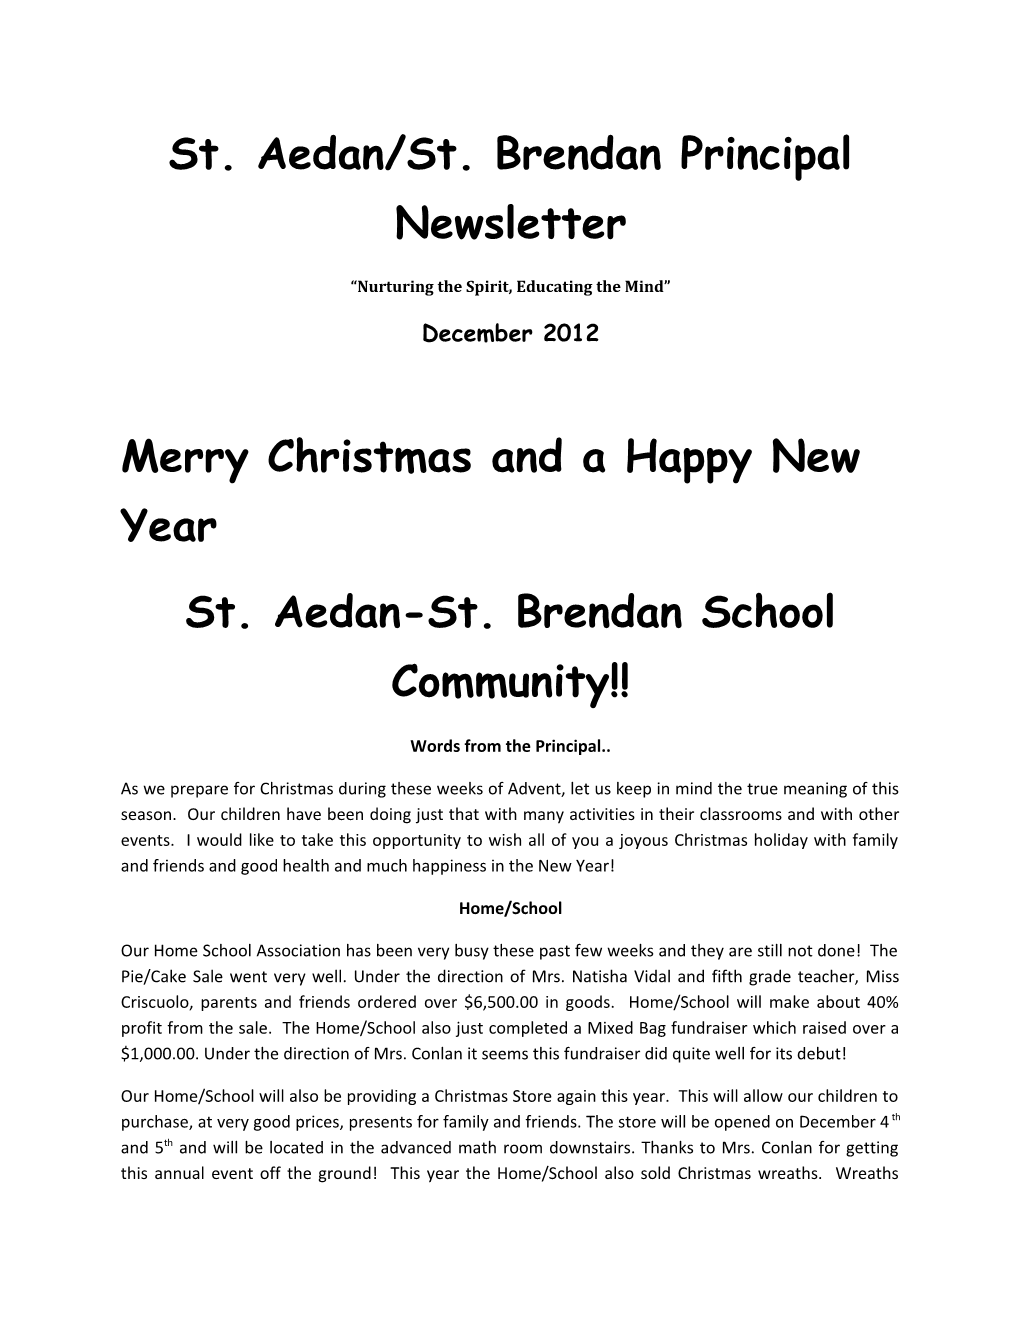 St. Aedan/St. Brendan Principal Newsletter